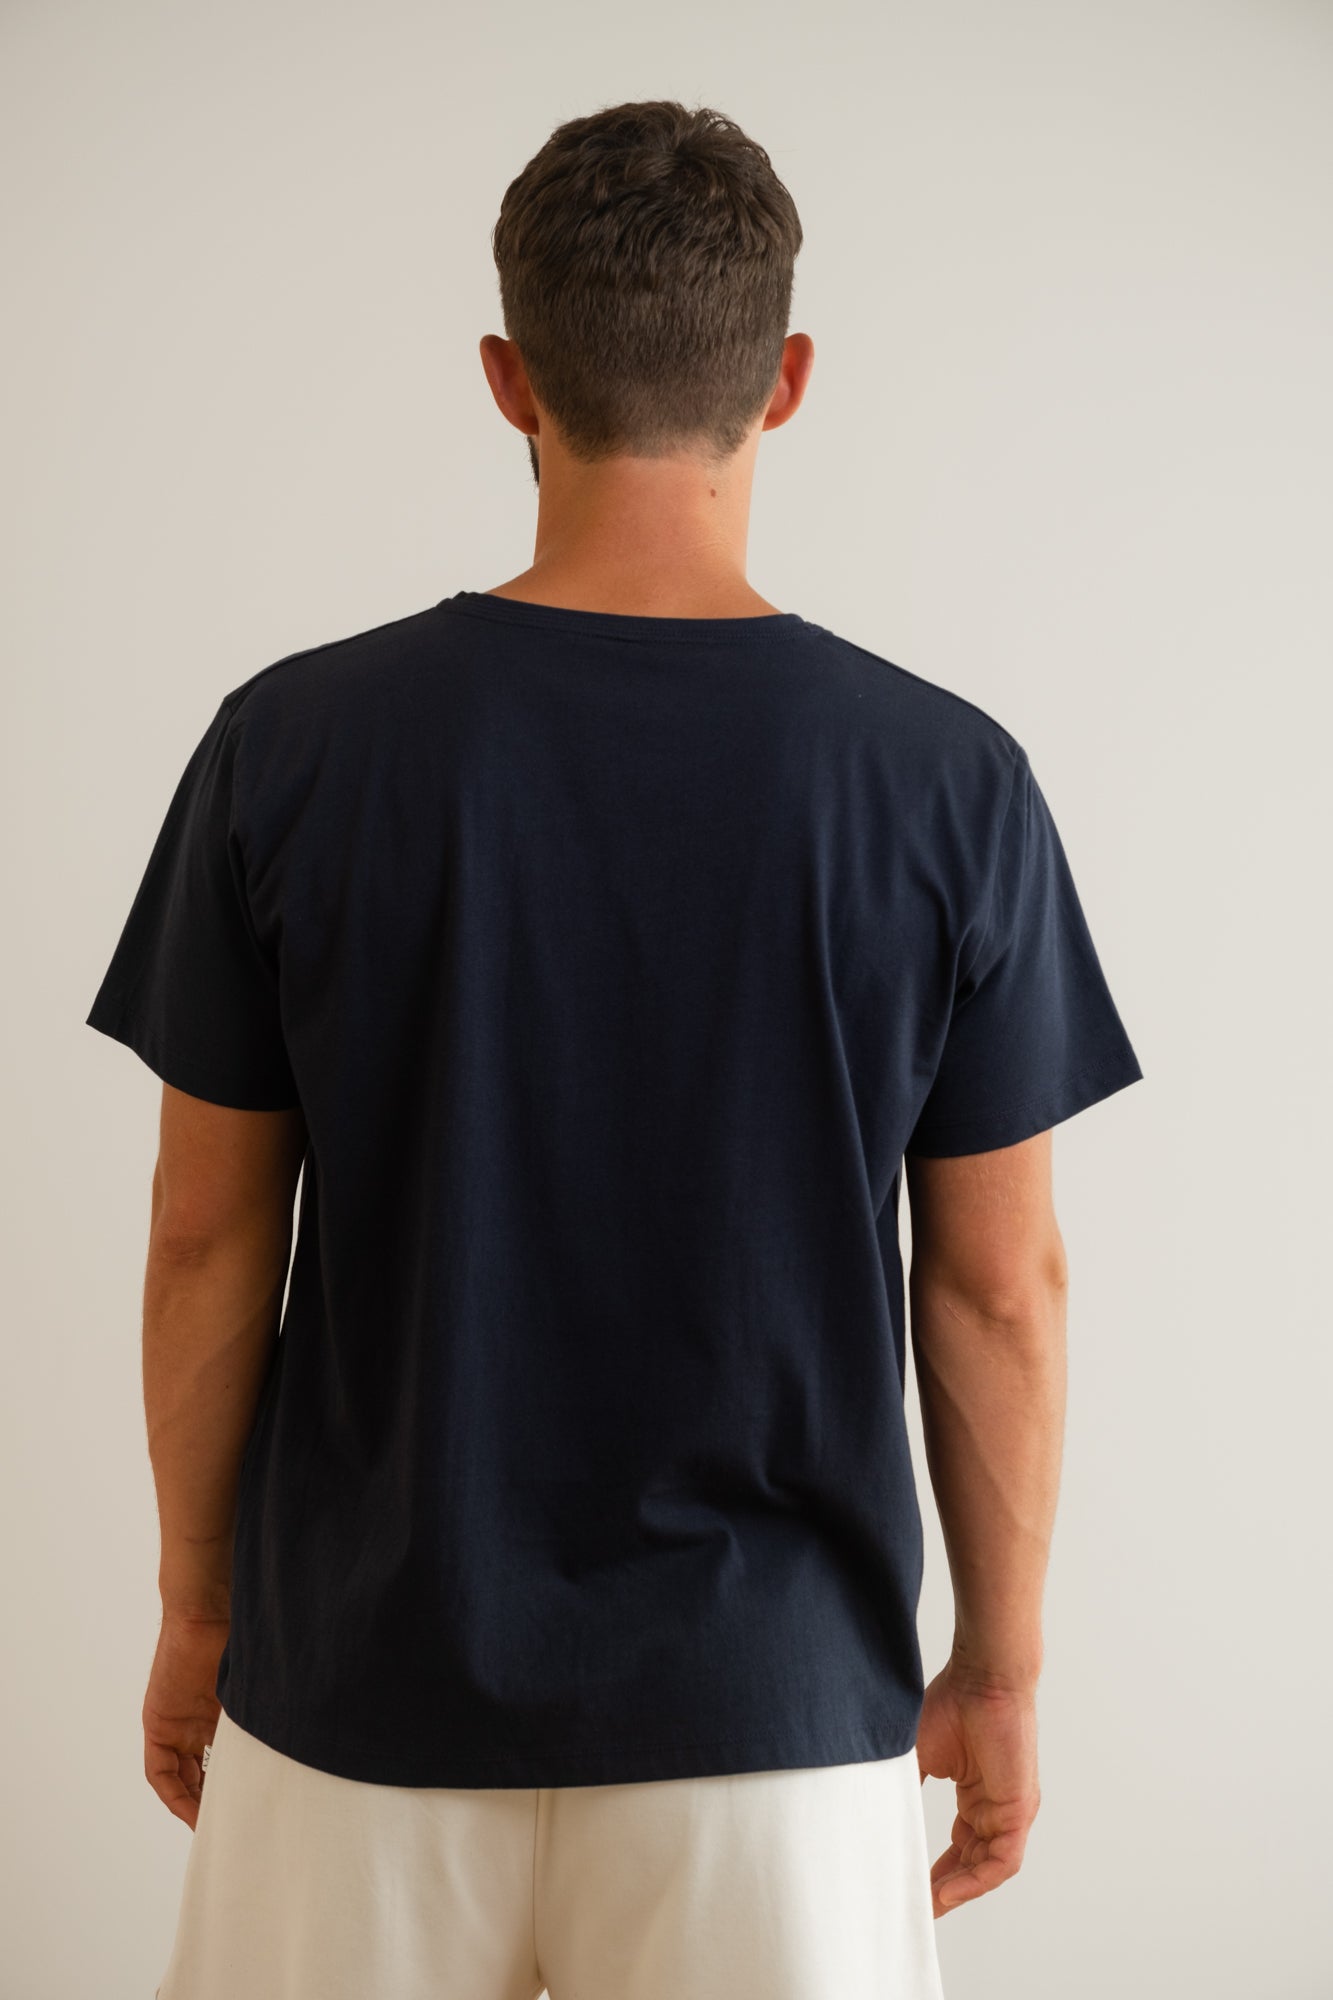 MIA Moda Regenerativa Camisetas XL Camiseta Esencial hombre - azul